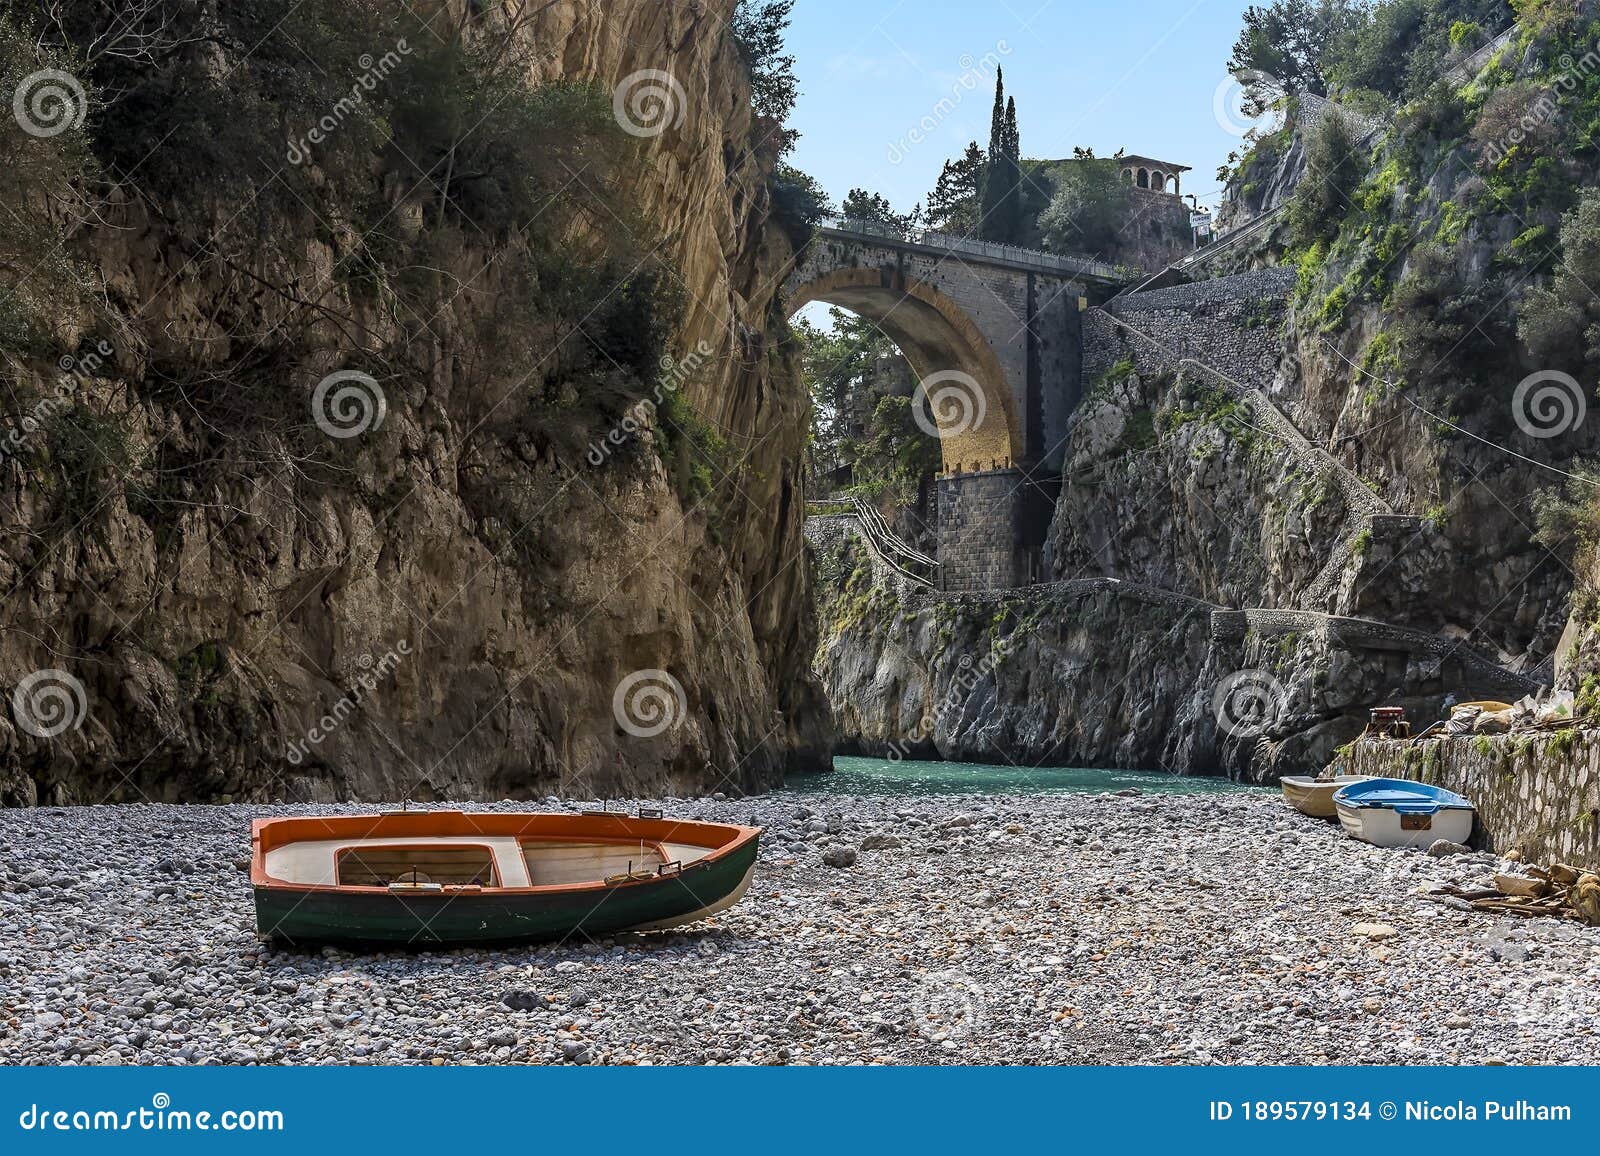 a small boat stands adrift on the shingle beach of fiordo di furore on the amalfi coast, italy